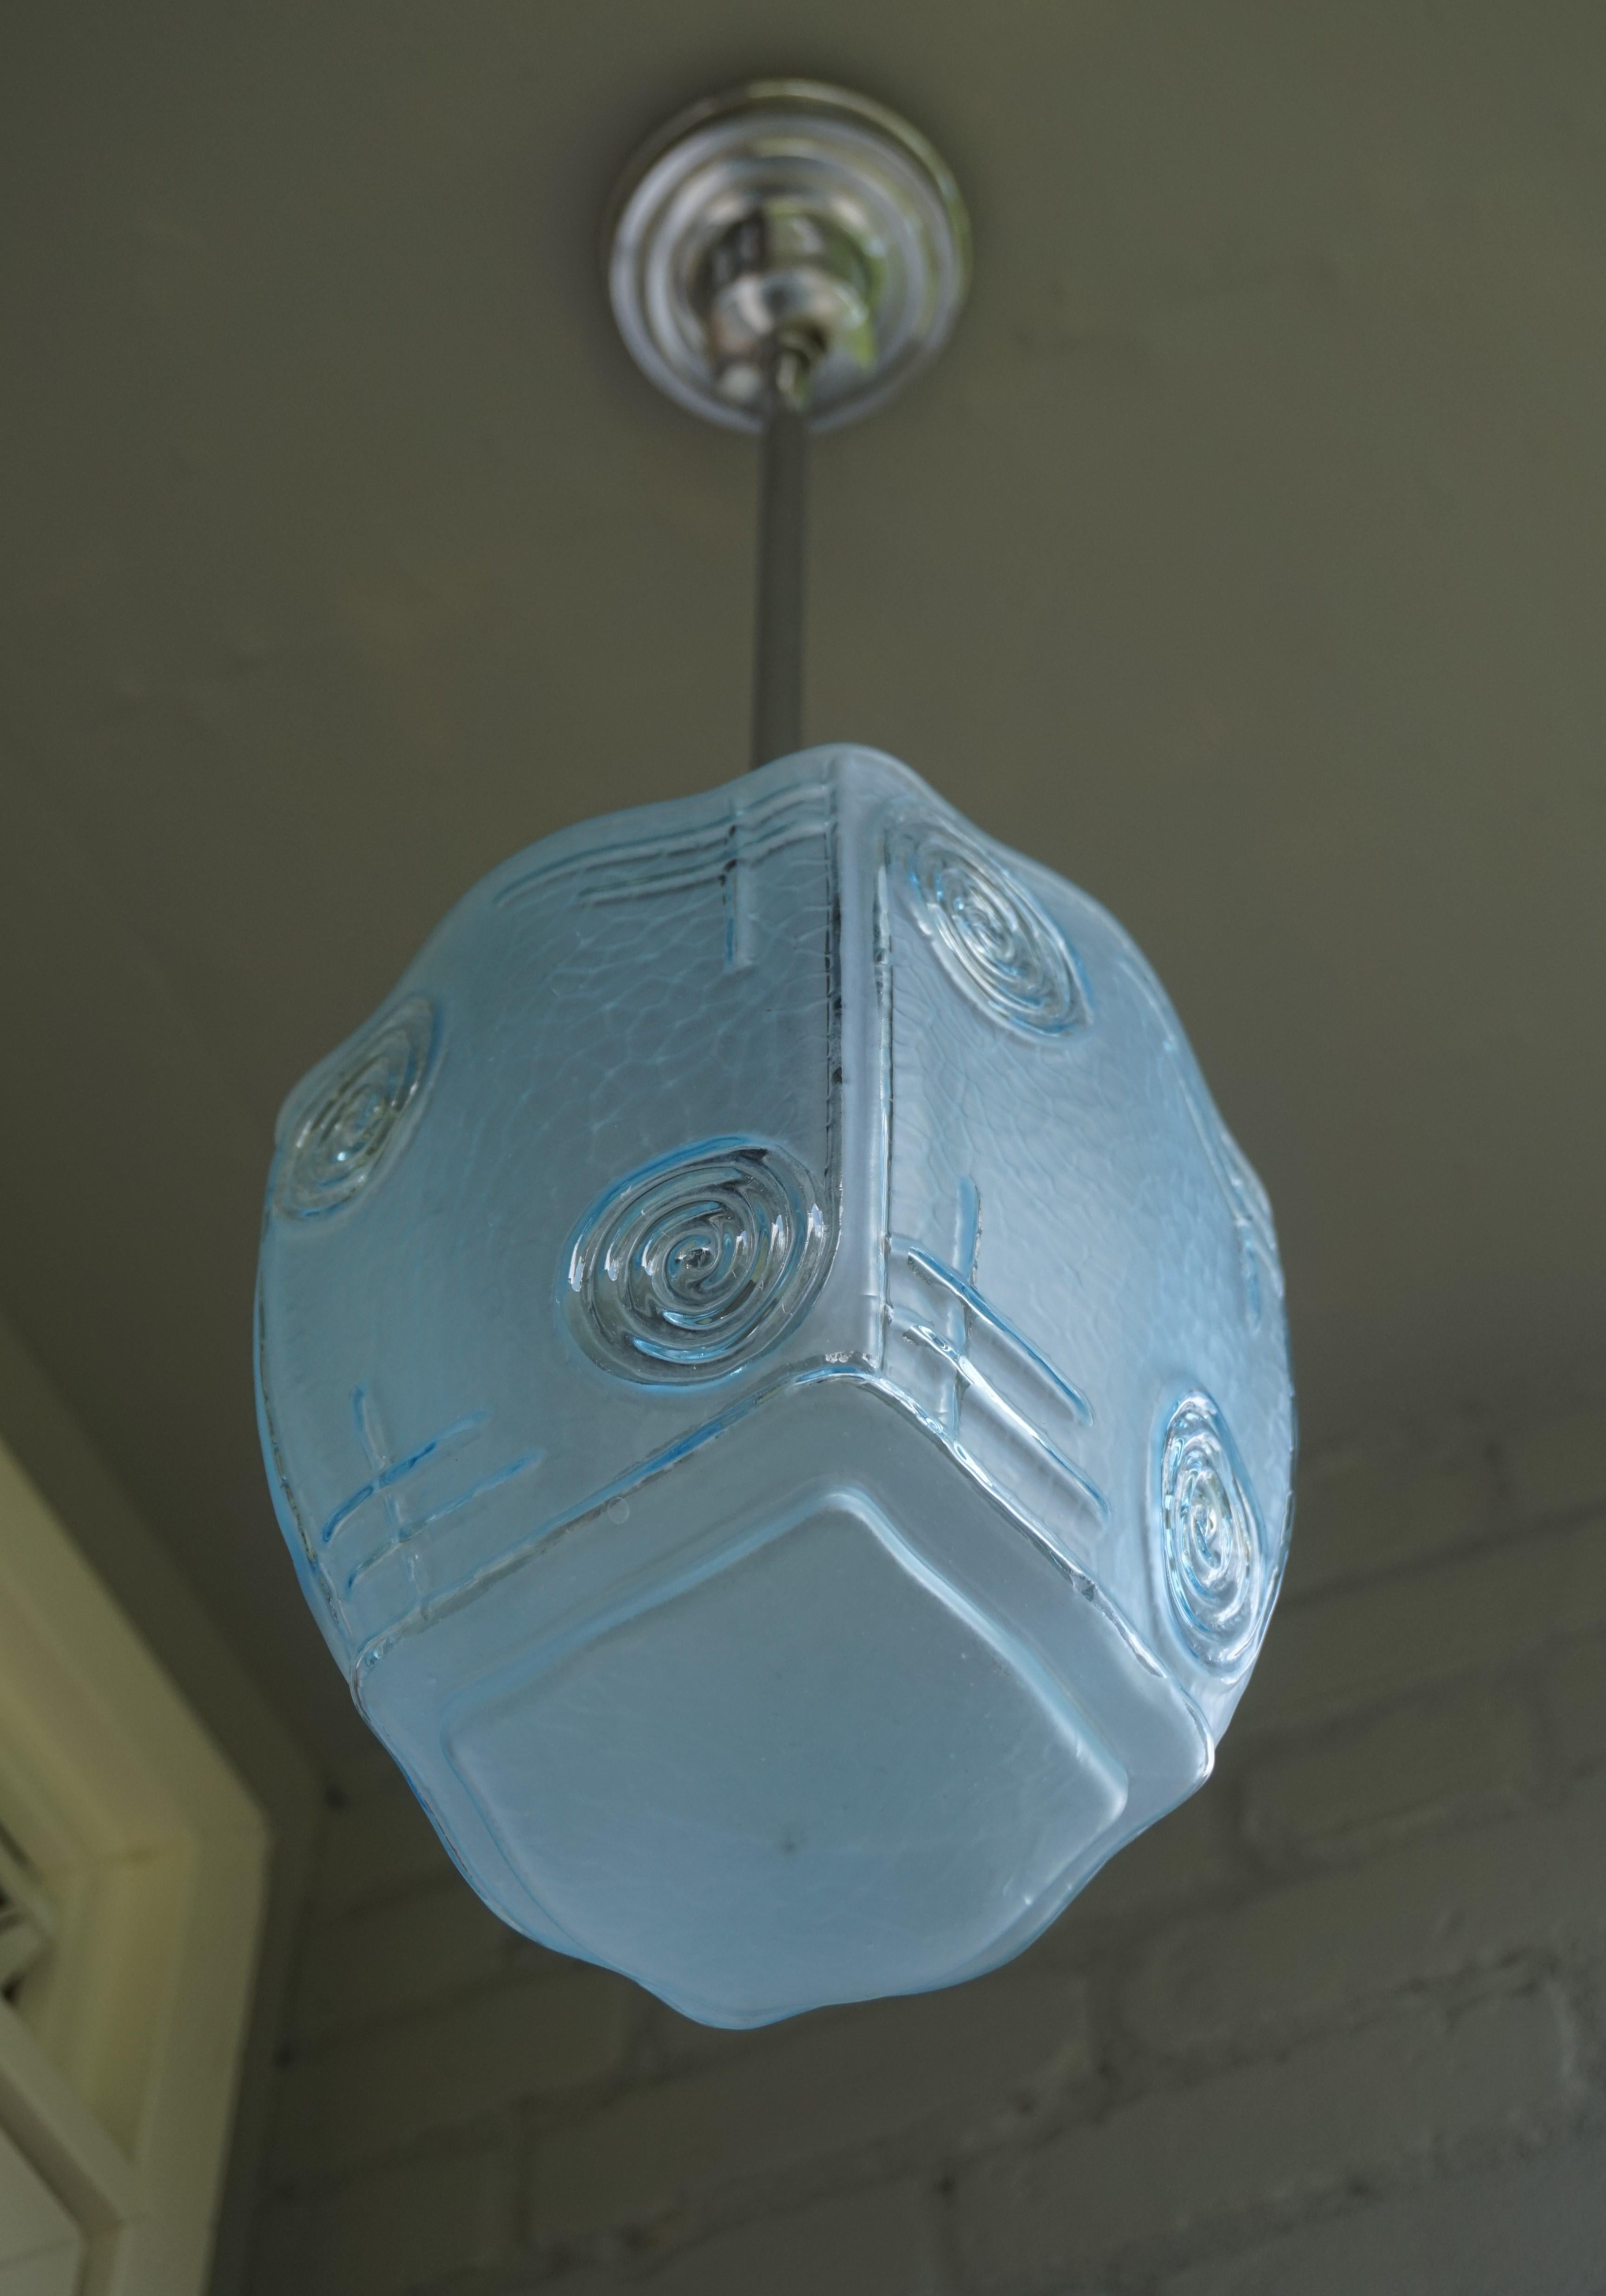 Rare and Excellent Condition Blue Glass and Chrome Metal Art Deco Pendant Light 13